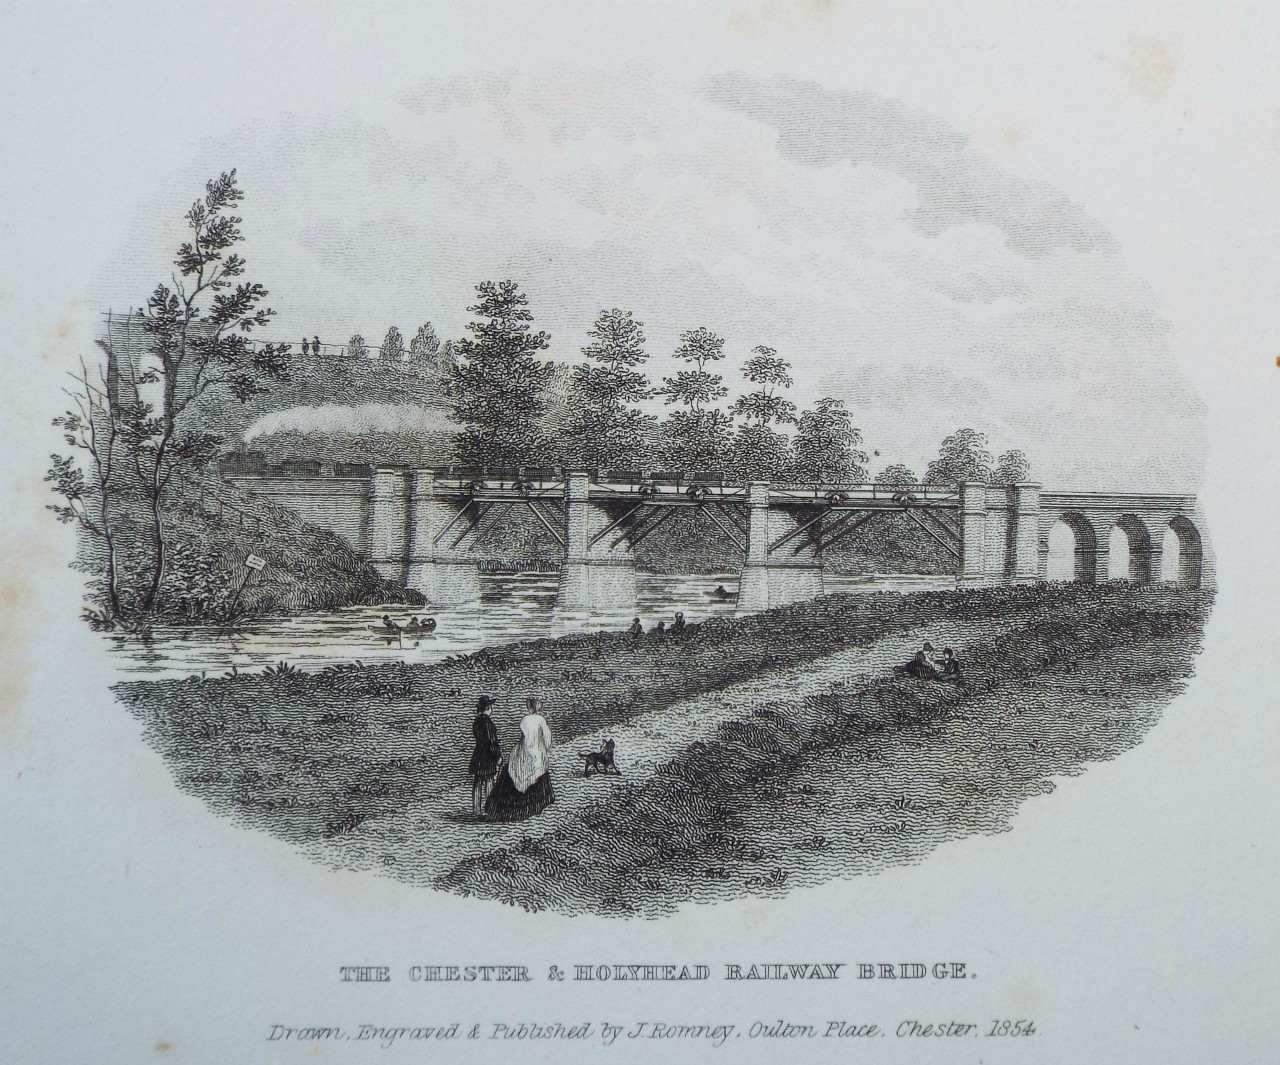 Print - The Chester & Holyhead Railway Bridge. - Romney